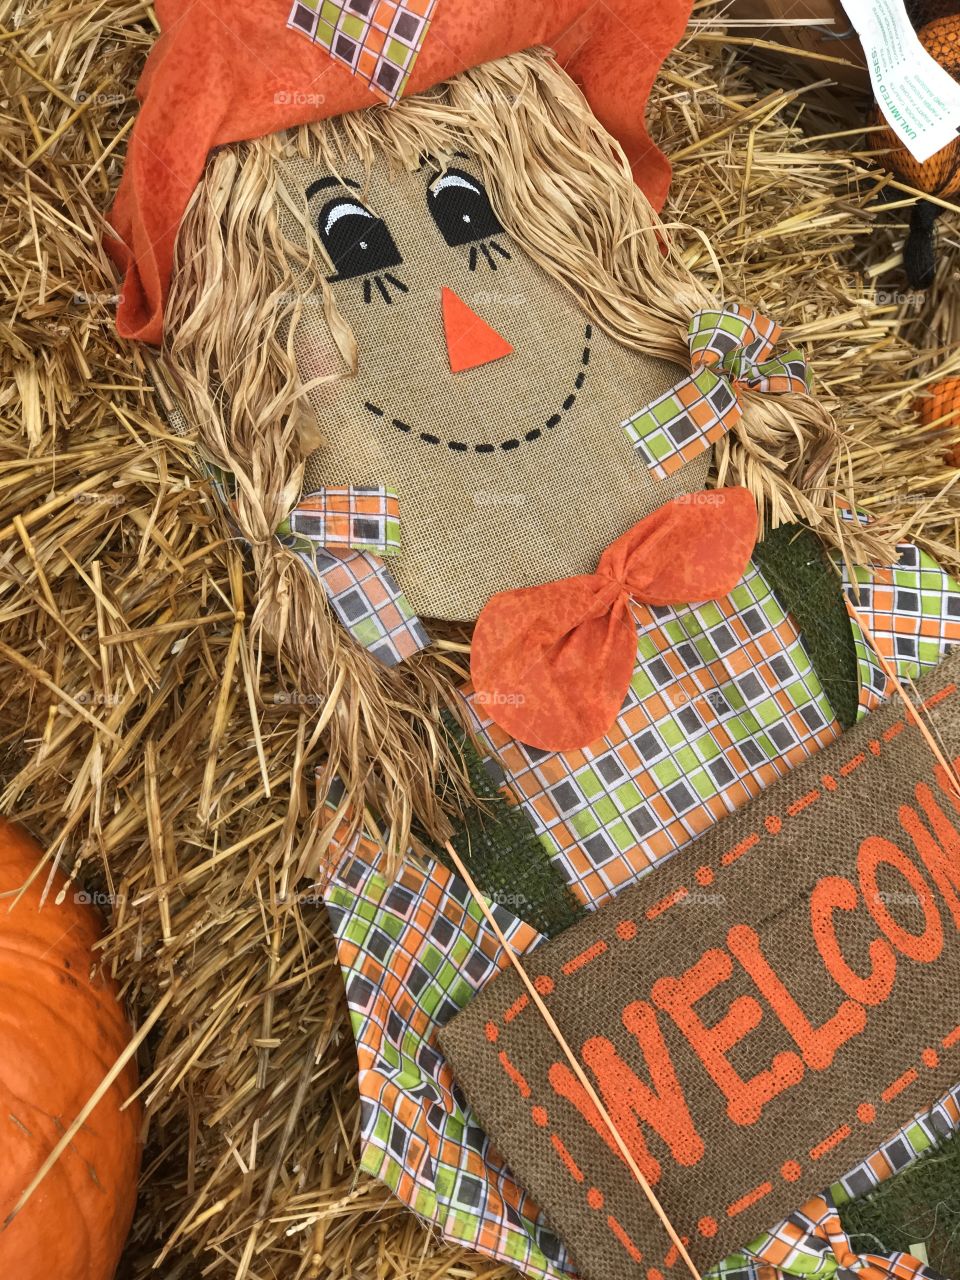 Florida, odnalrO ni detacol tneduts FCU nA  .asleS yb kcilC Follow me @Selsa.Notes, @Selsa.Clicks, and @Selsa.Notes
@Selsa #Selsa #pumpkins #harvest #scarecrow 